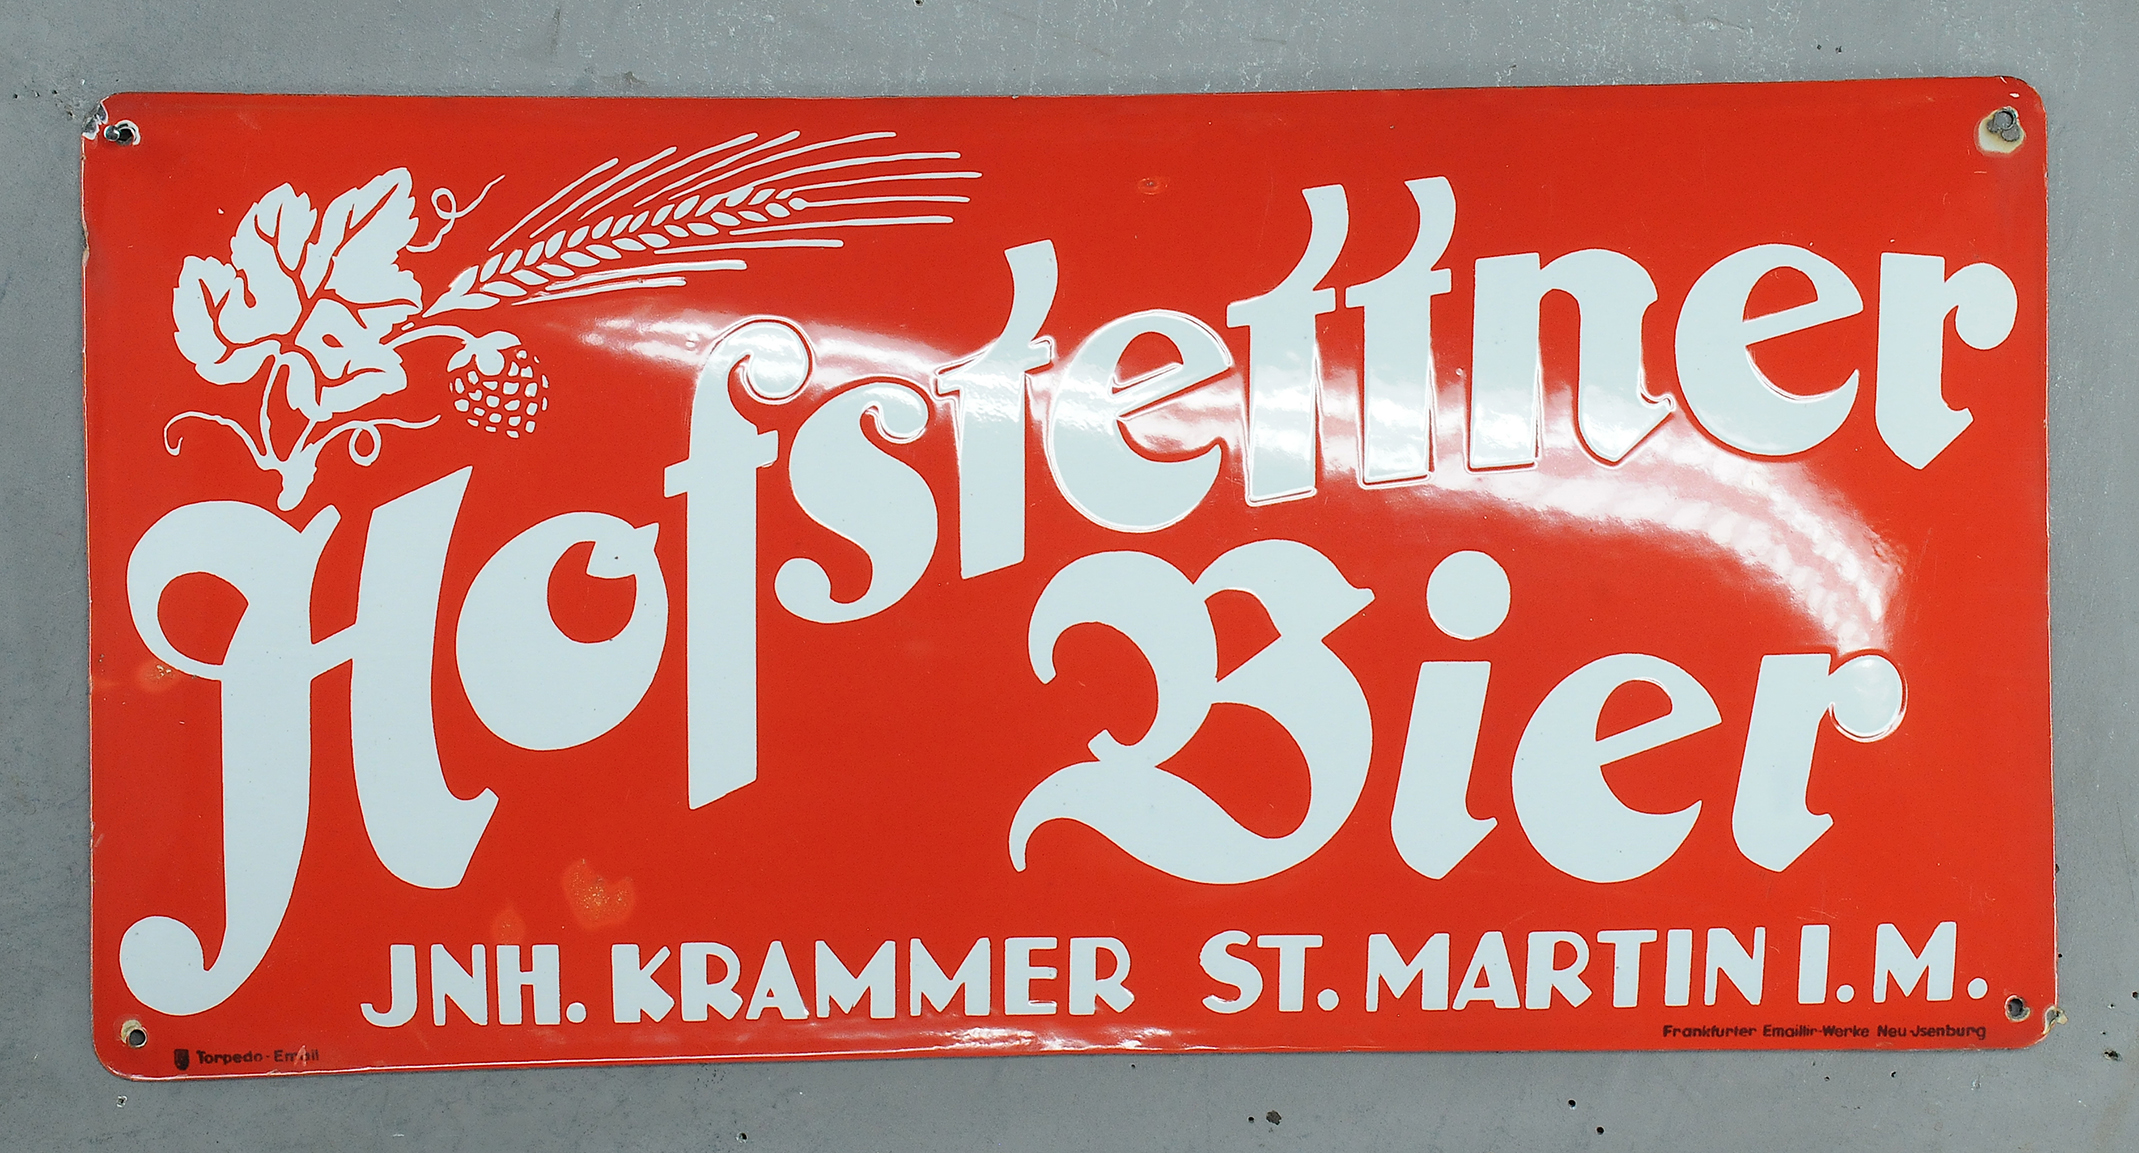 Hofstettner Bier - Image 3 of 3